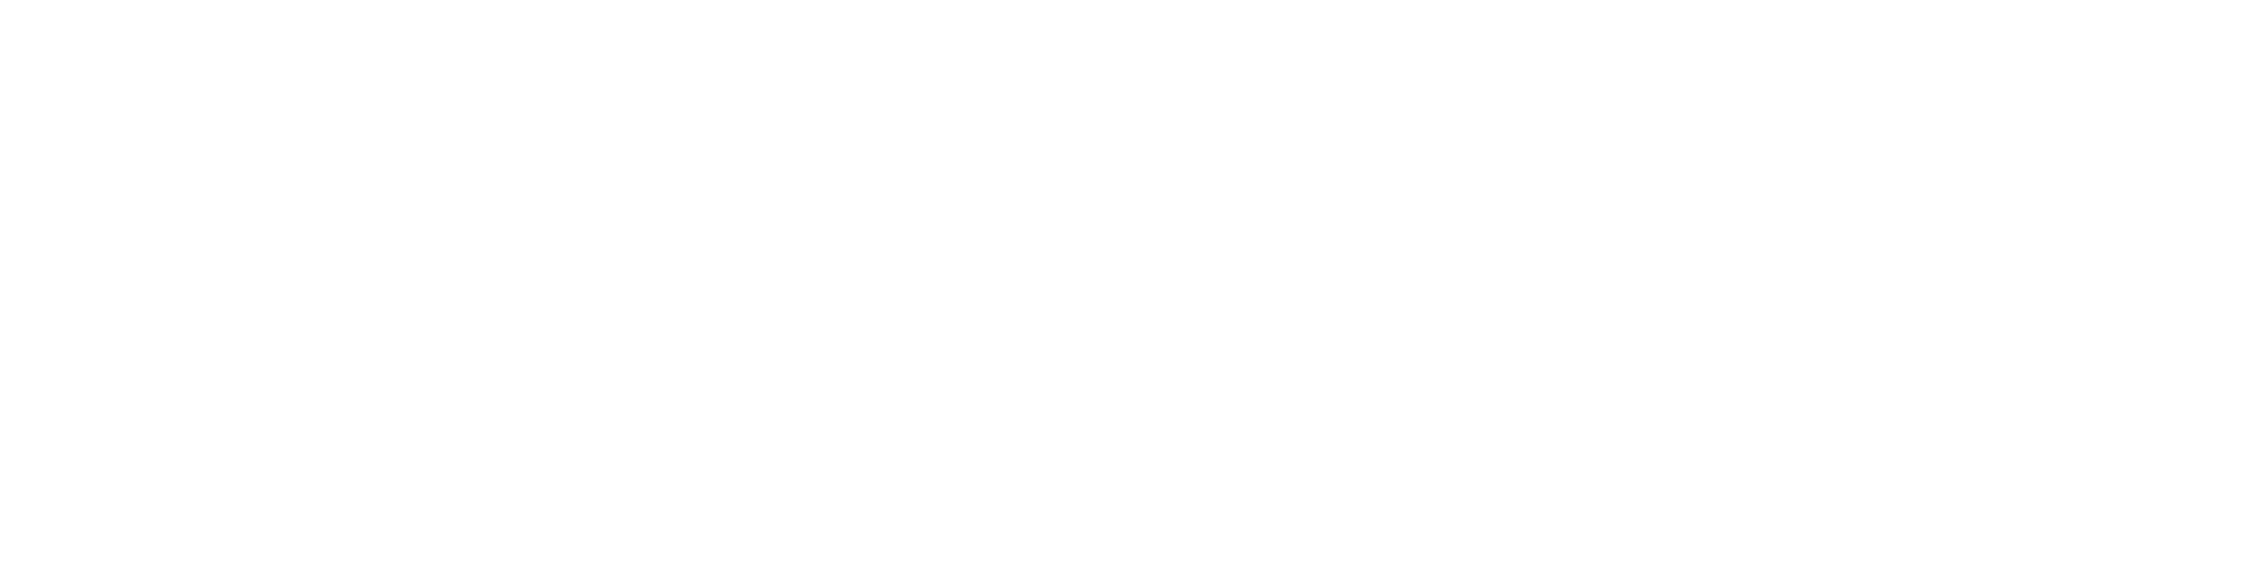 ACPA_Logo-Condensed-White